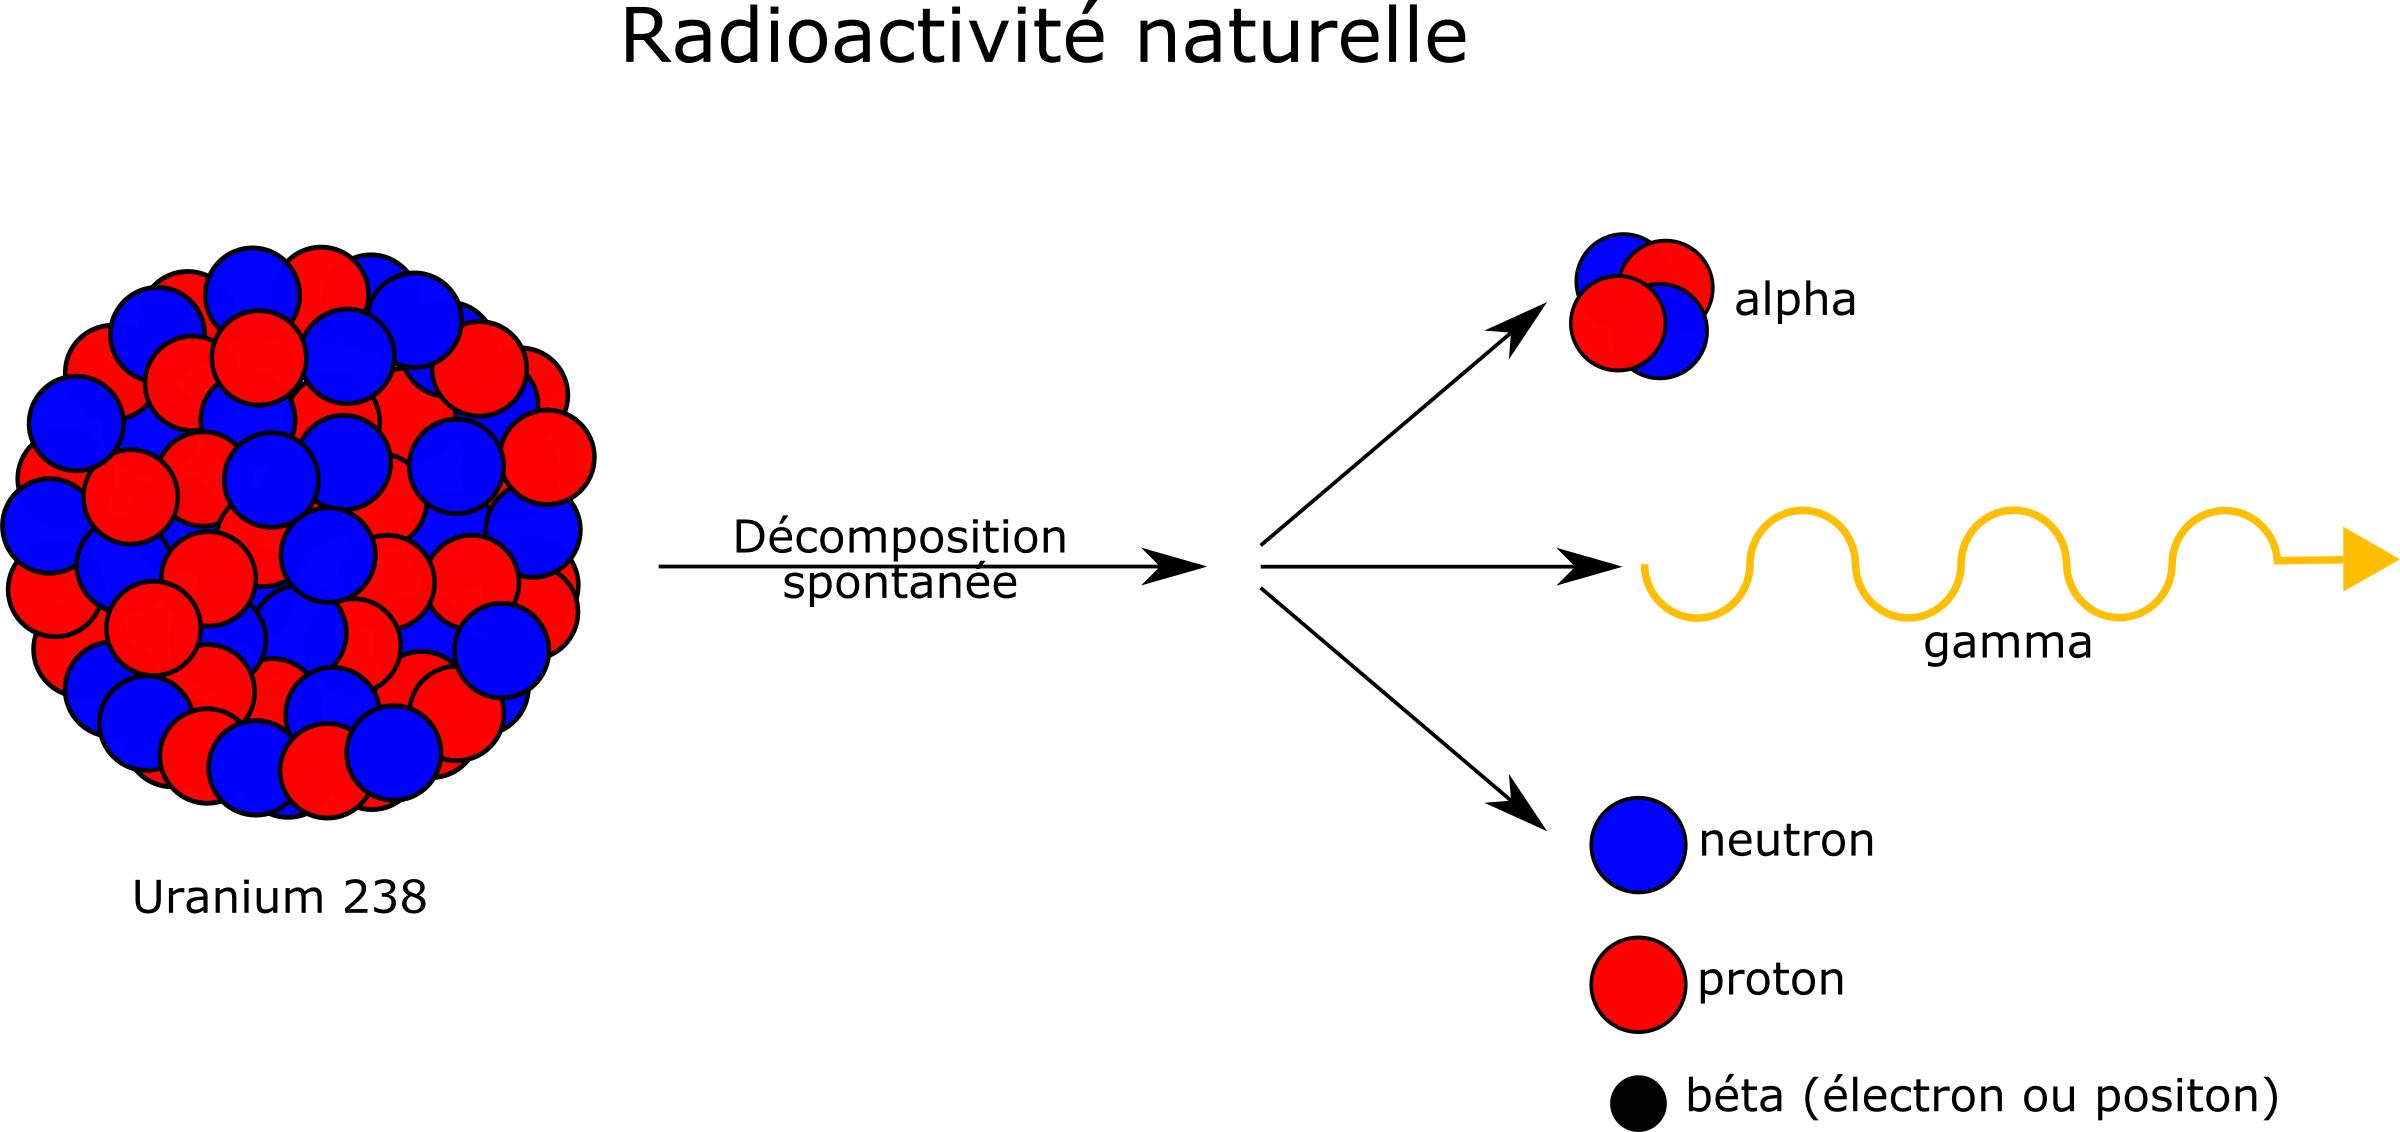 radioactivite naturelle png